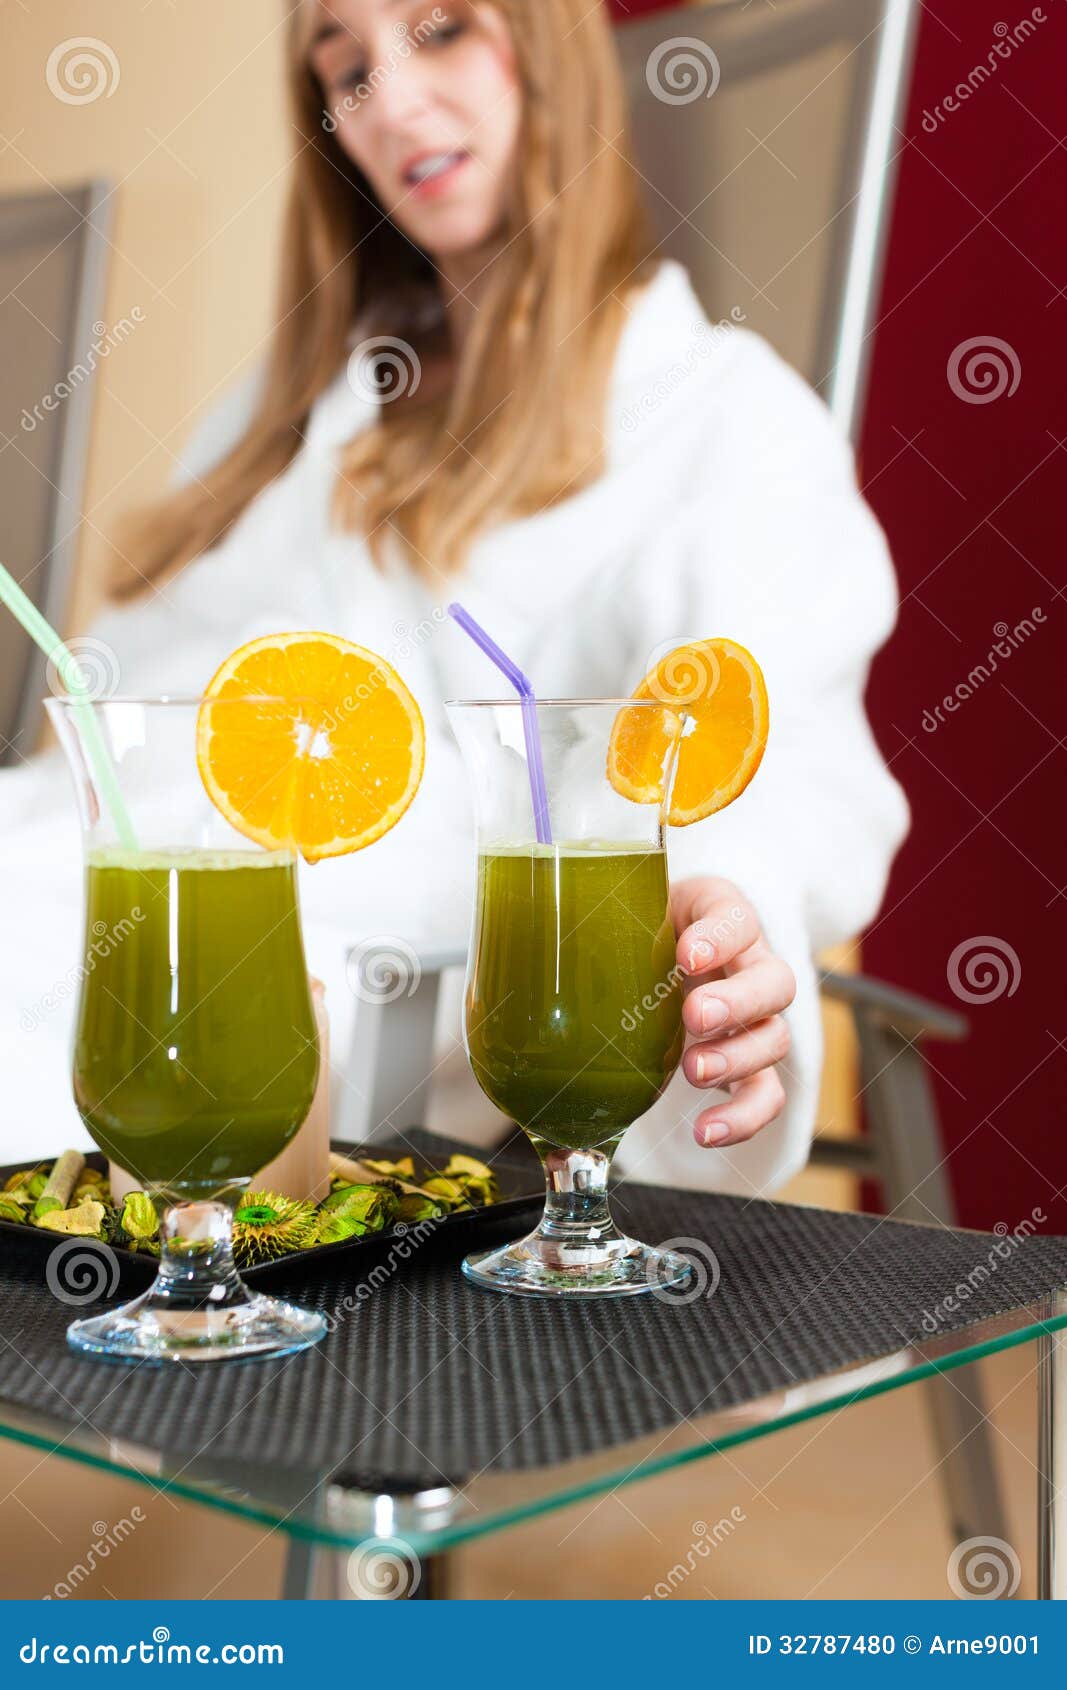 wellness - chlorophyll-shake on a table